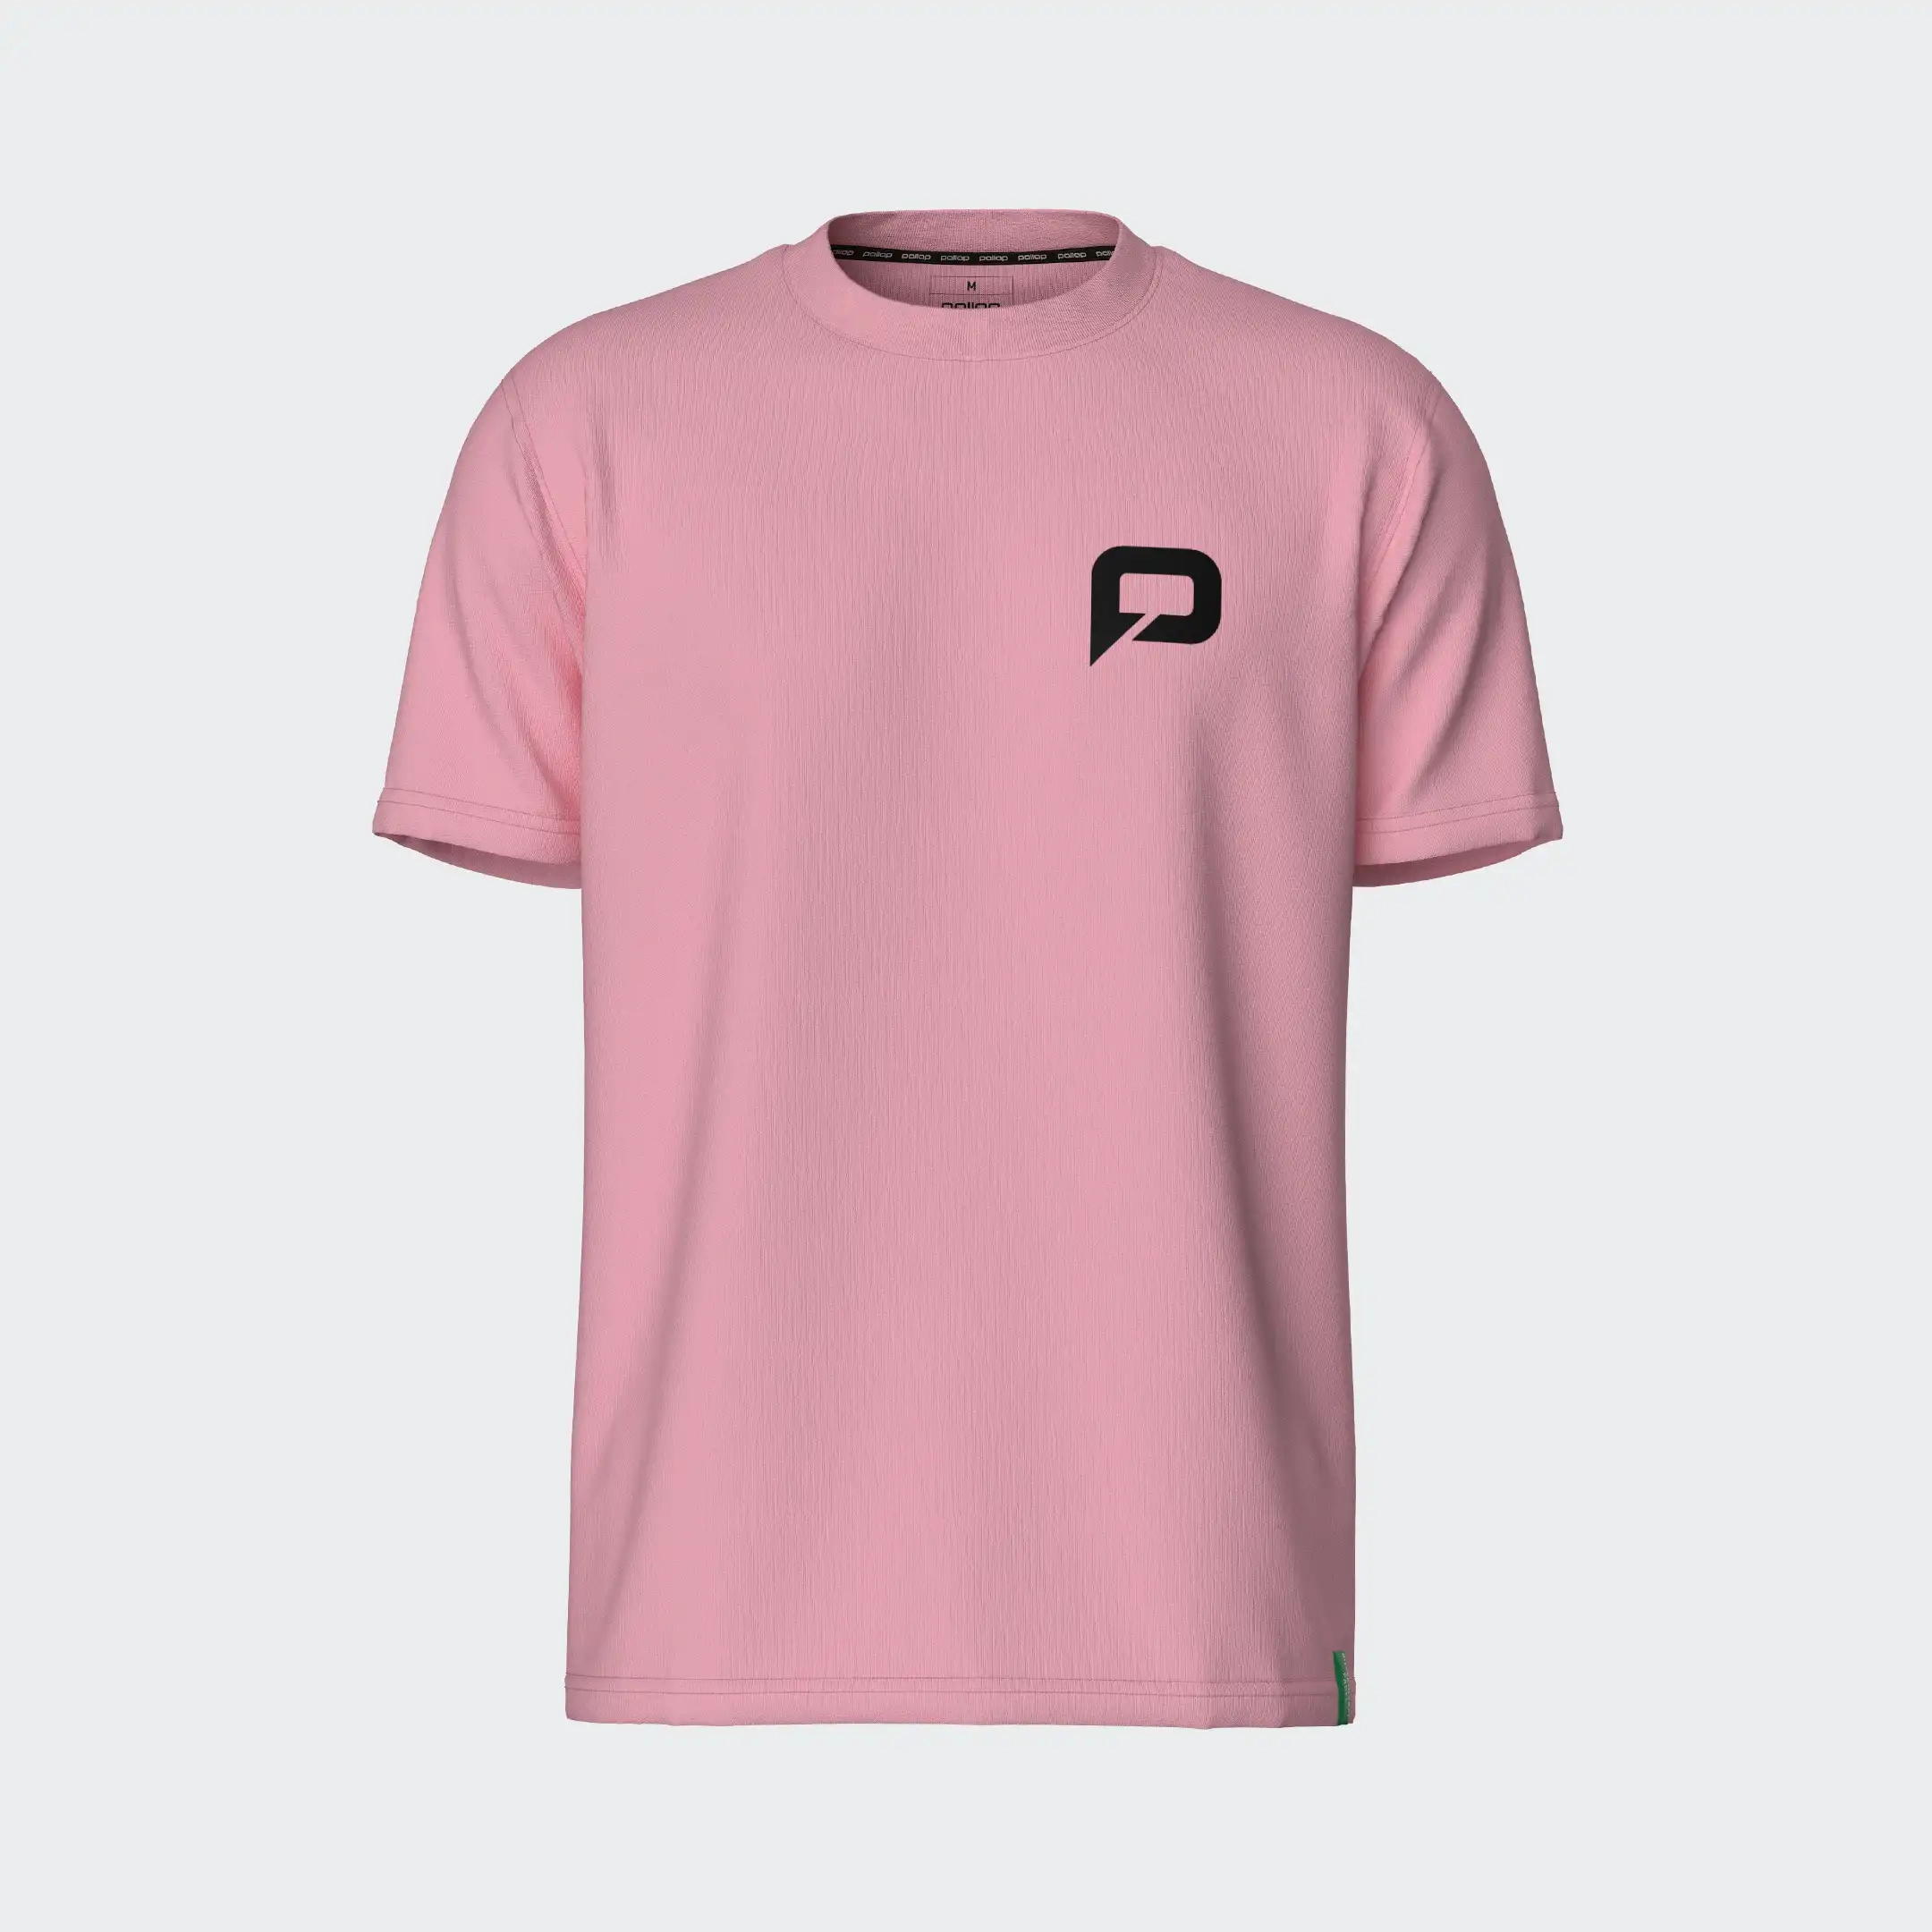 Pallap Technical Training Shirt light pink/black